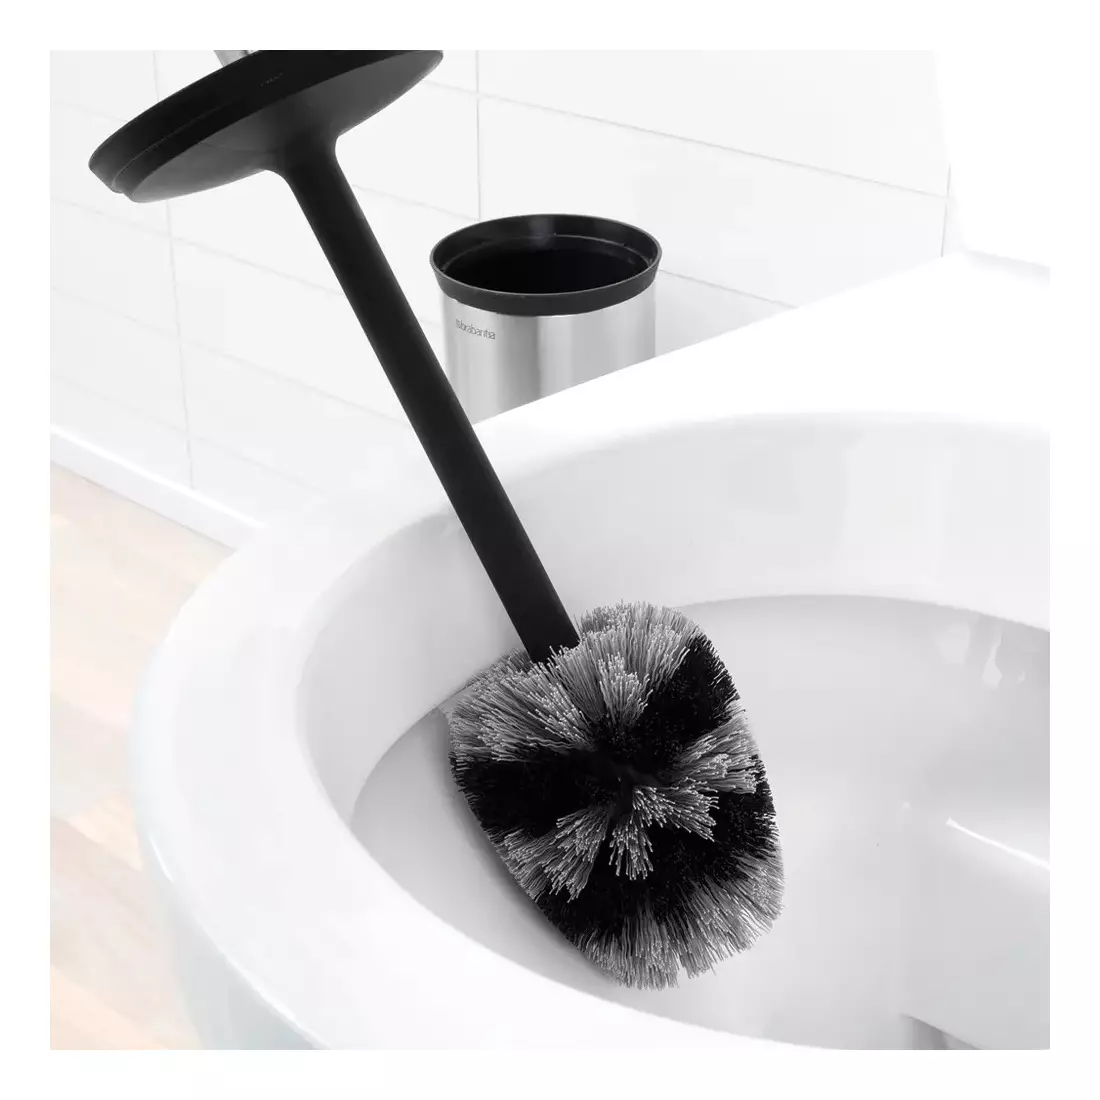 BRABANTIA replacement toilet brush, wall-mounted, black